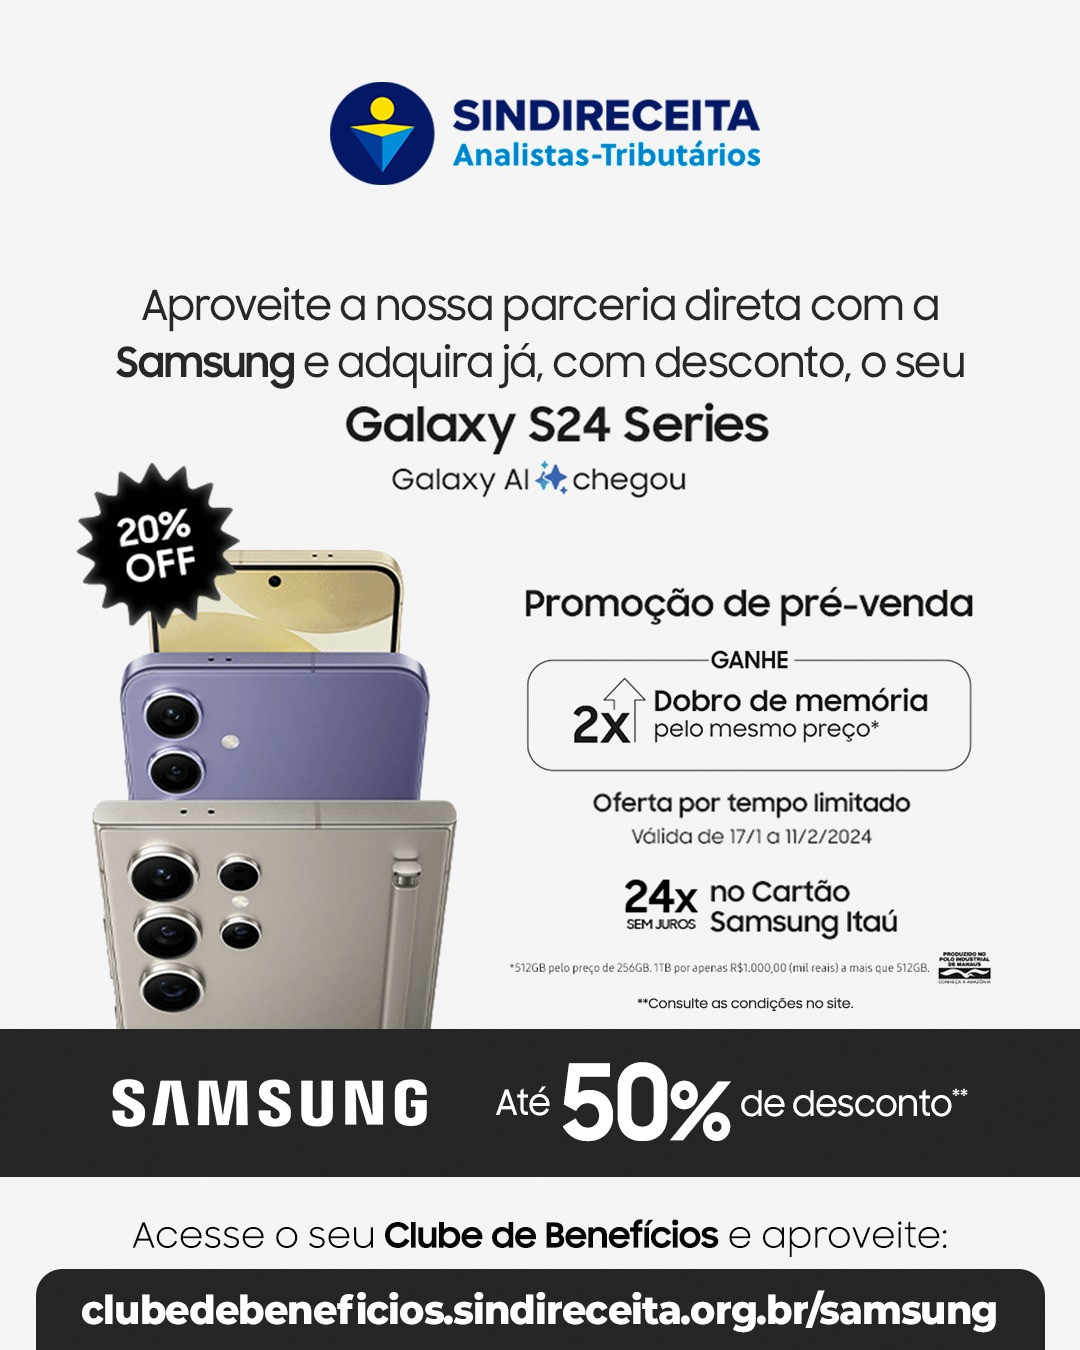 Clube de Benefícios do Sindireceita: descontos especiais no novo Samsung Galaxy S24 Series